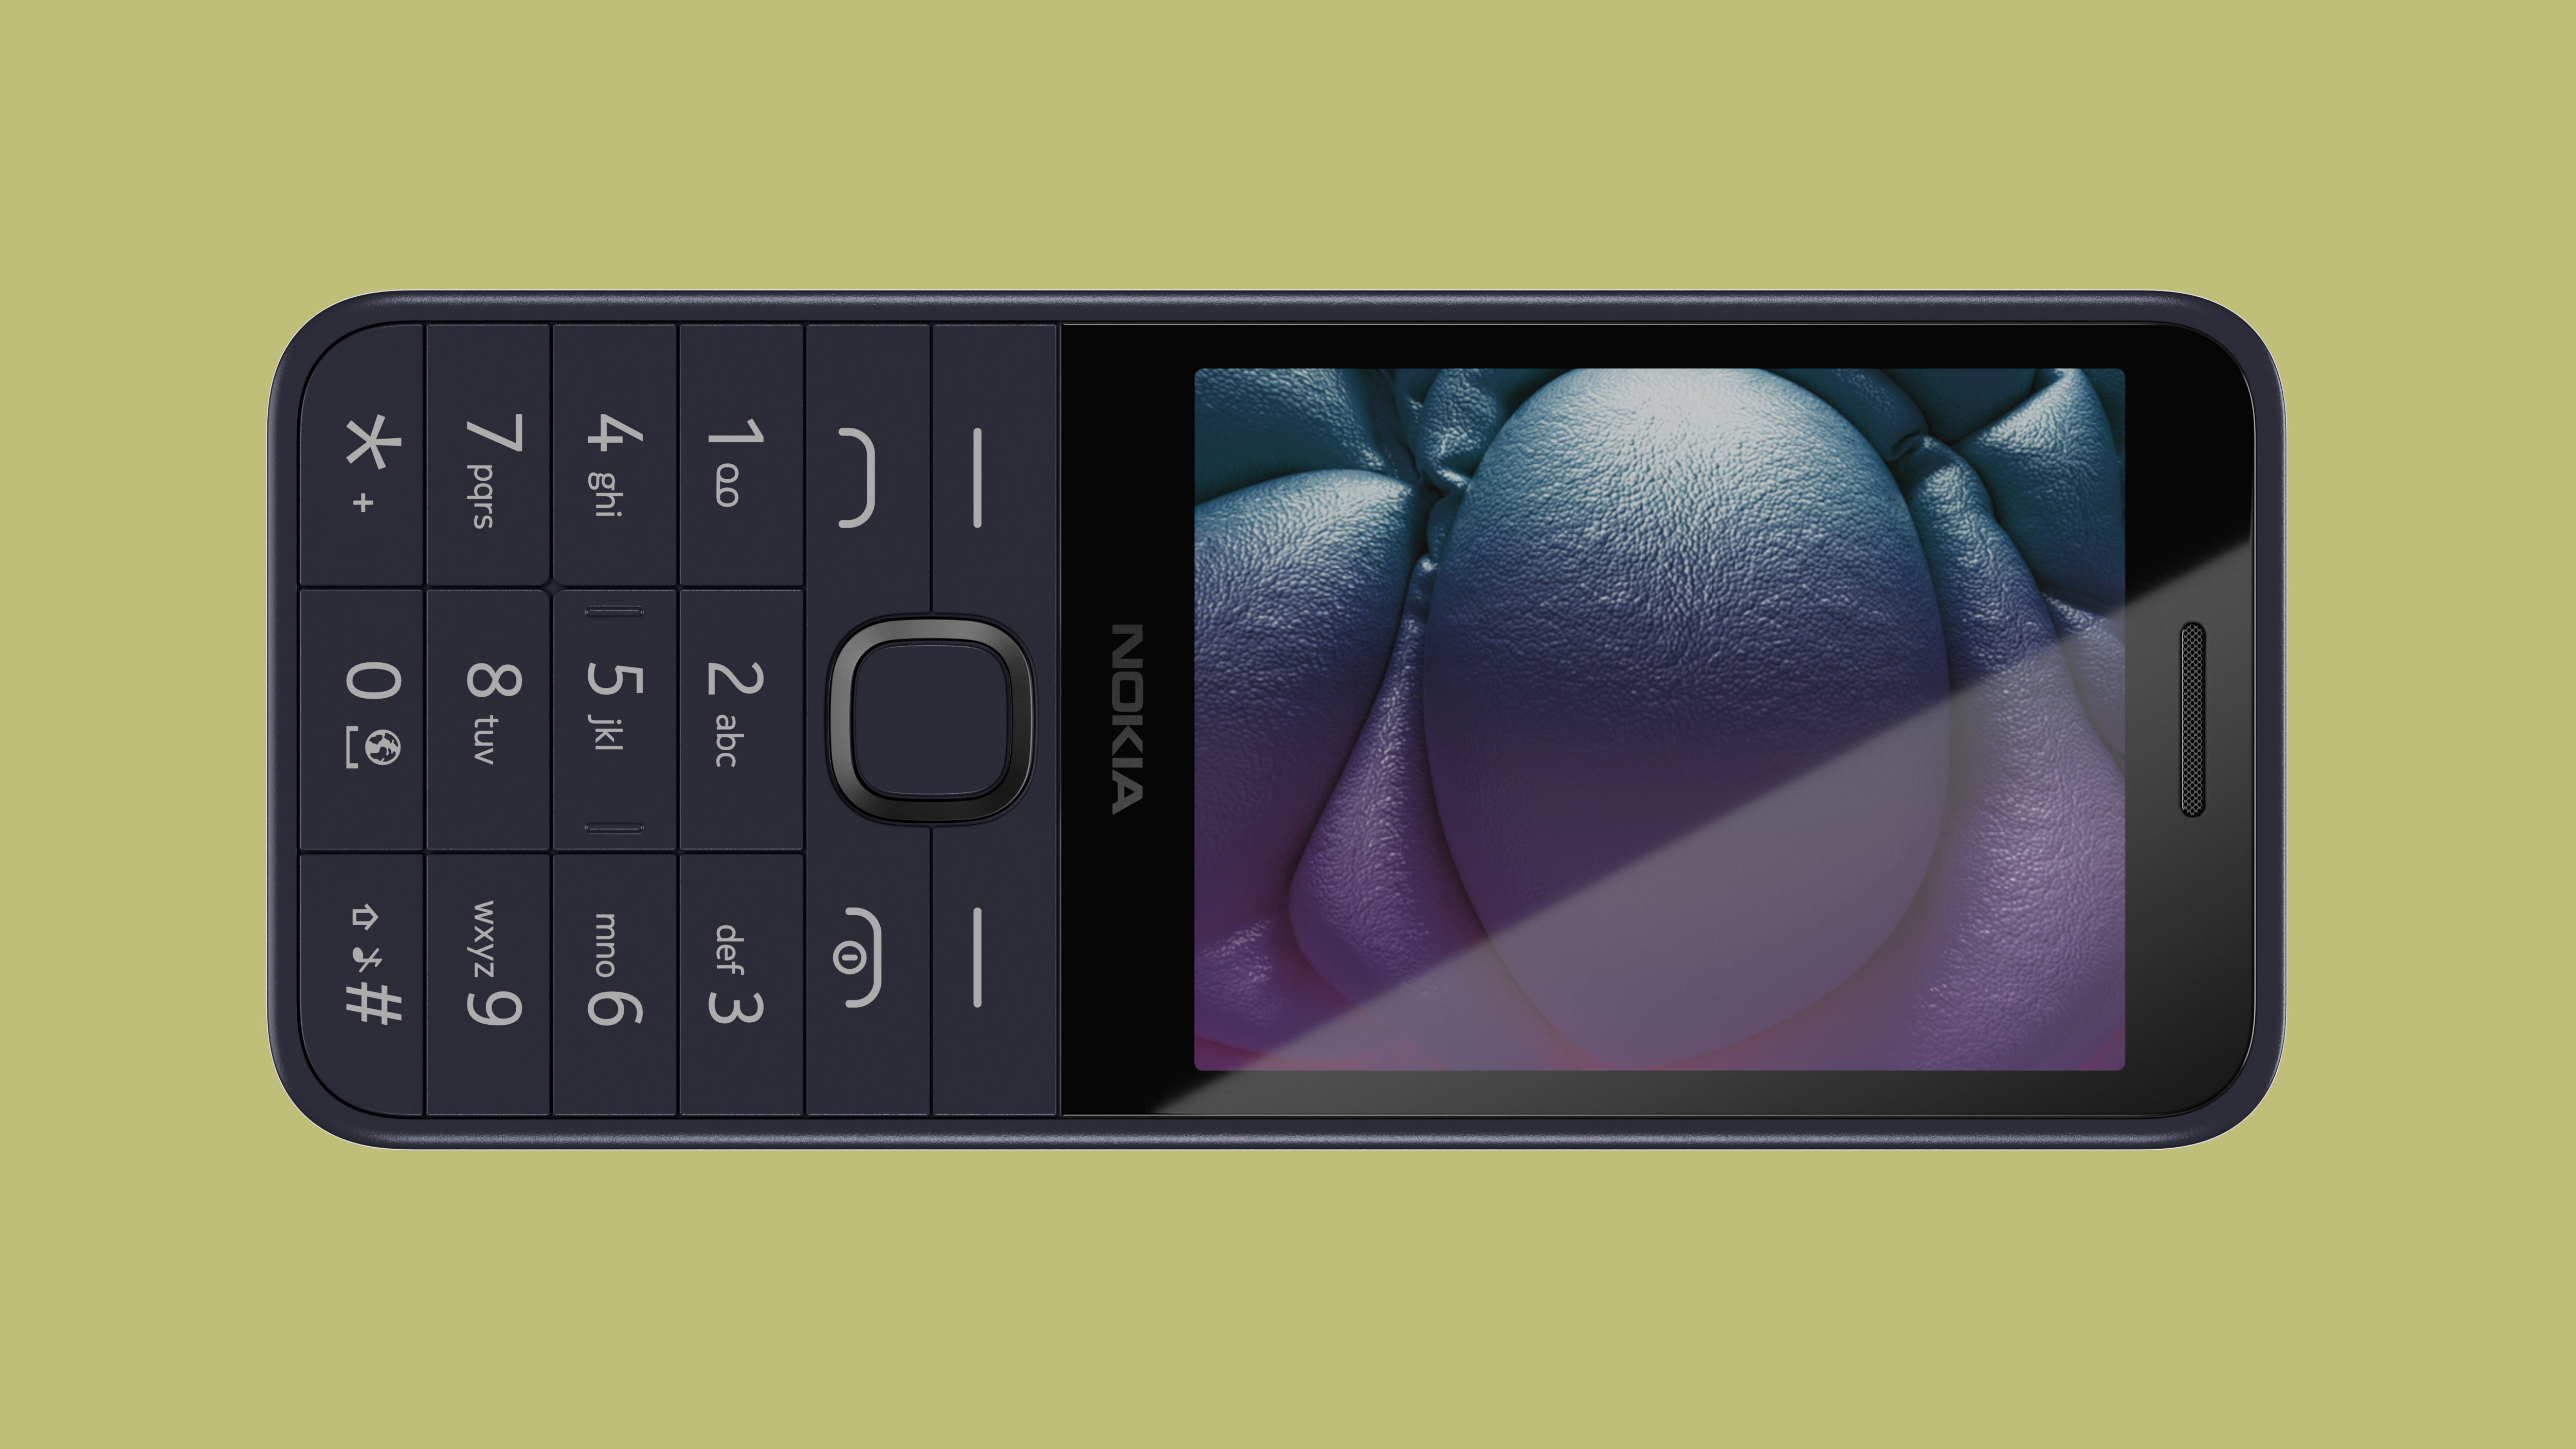 Nokia candybar phones from HMD